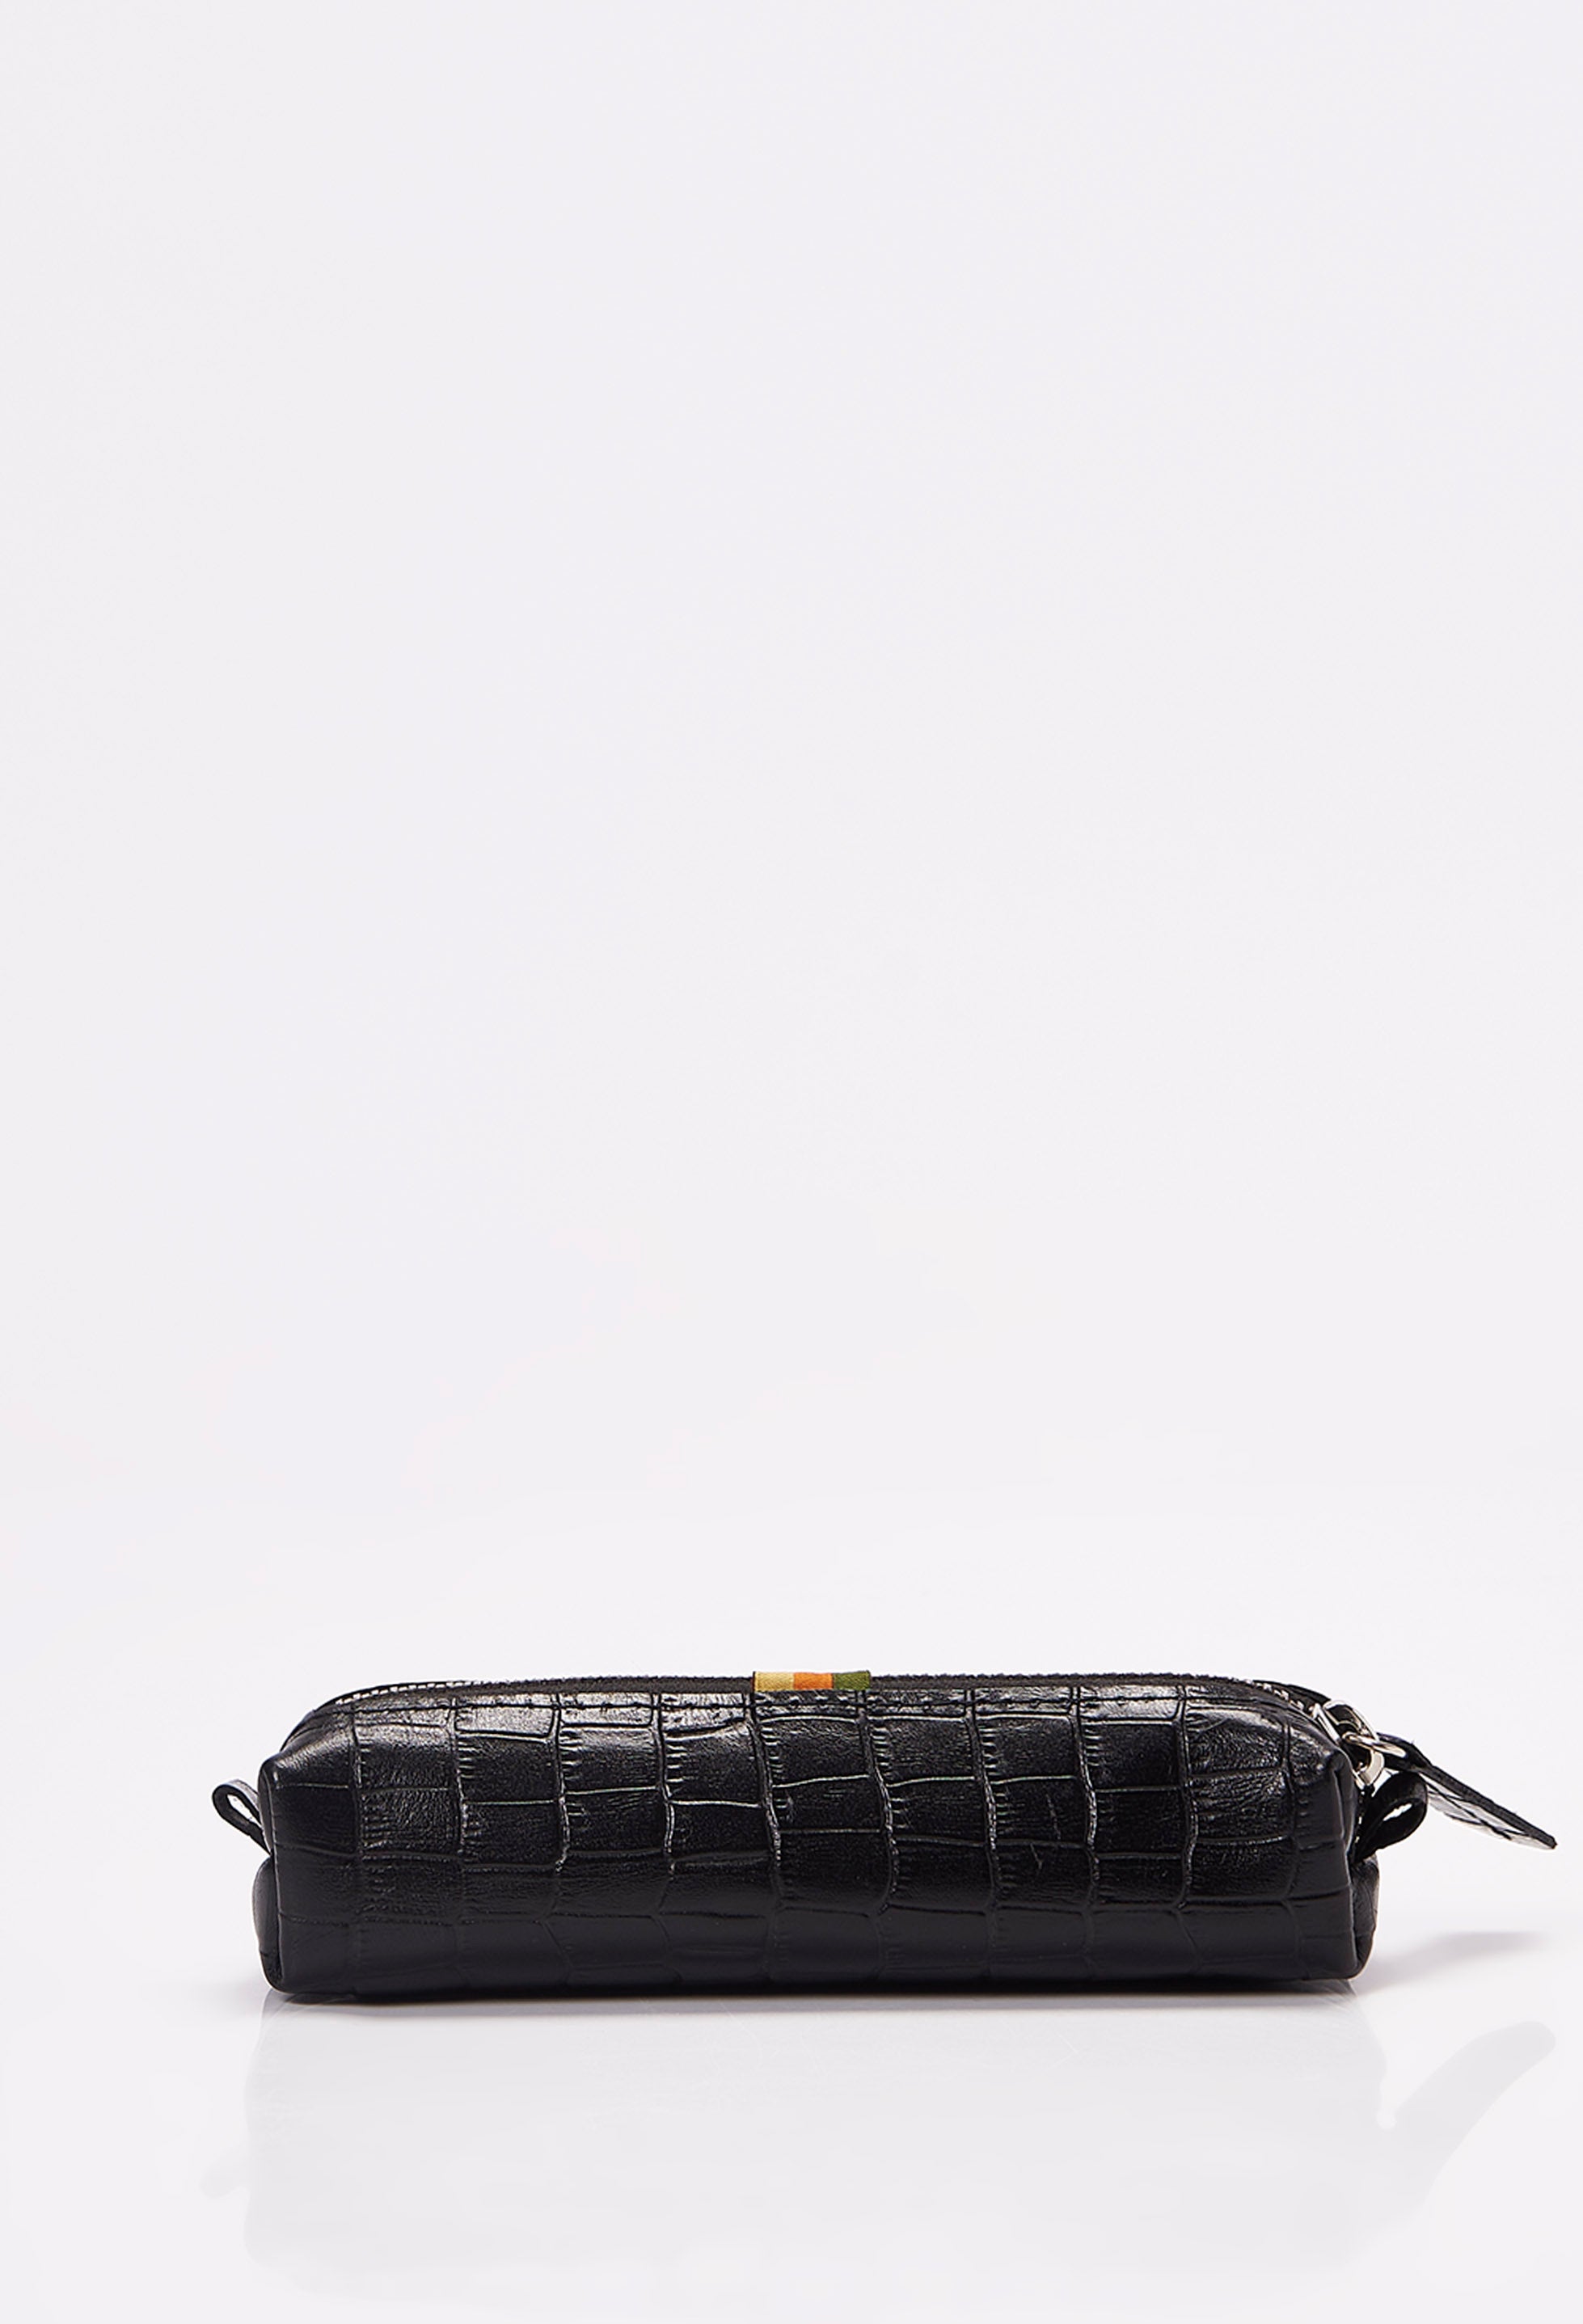 Rear of a Black Croco Leather Pencil Case.